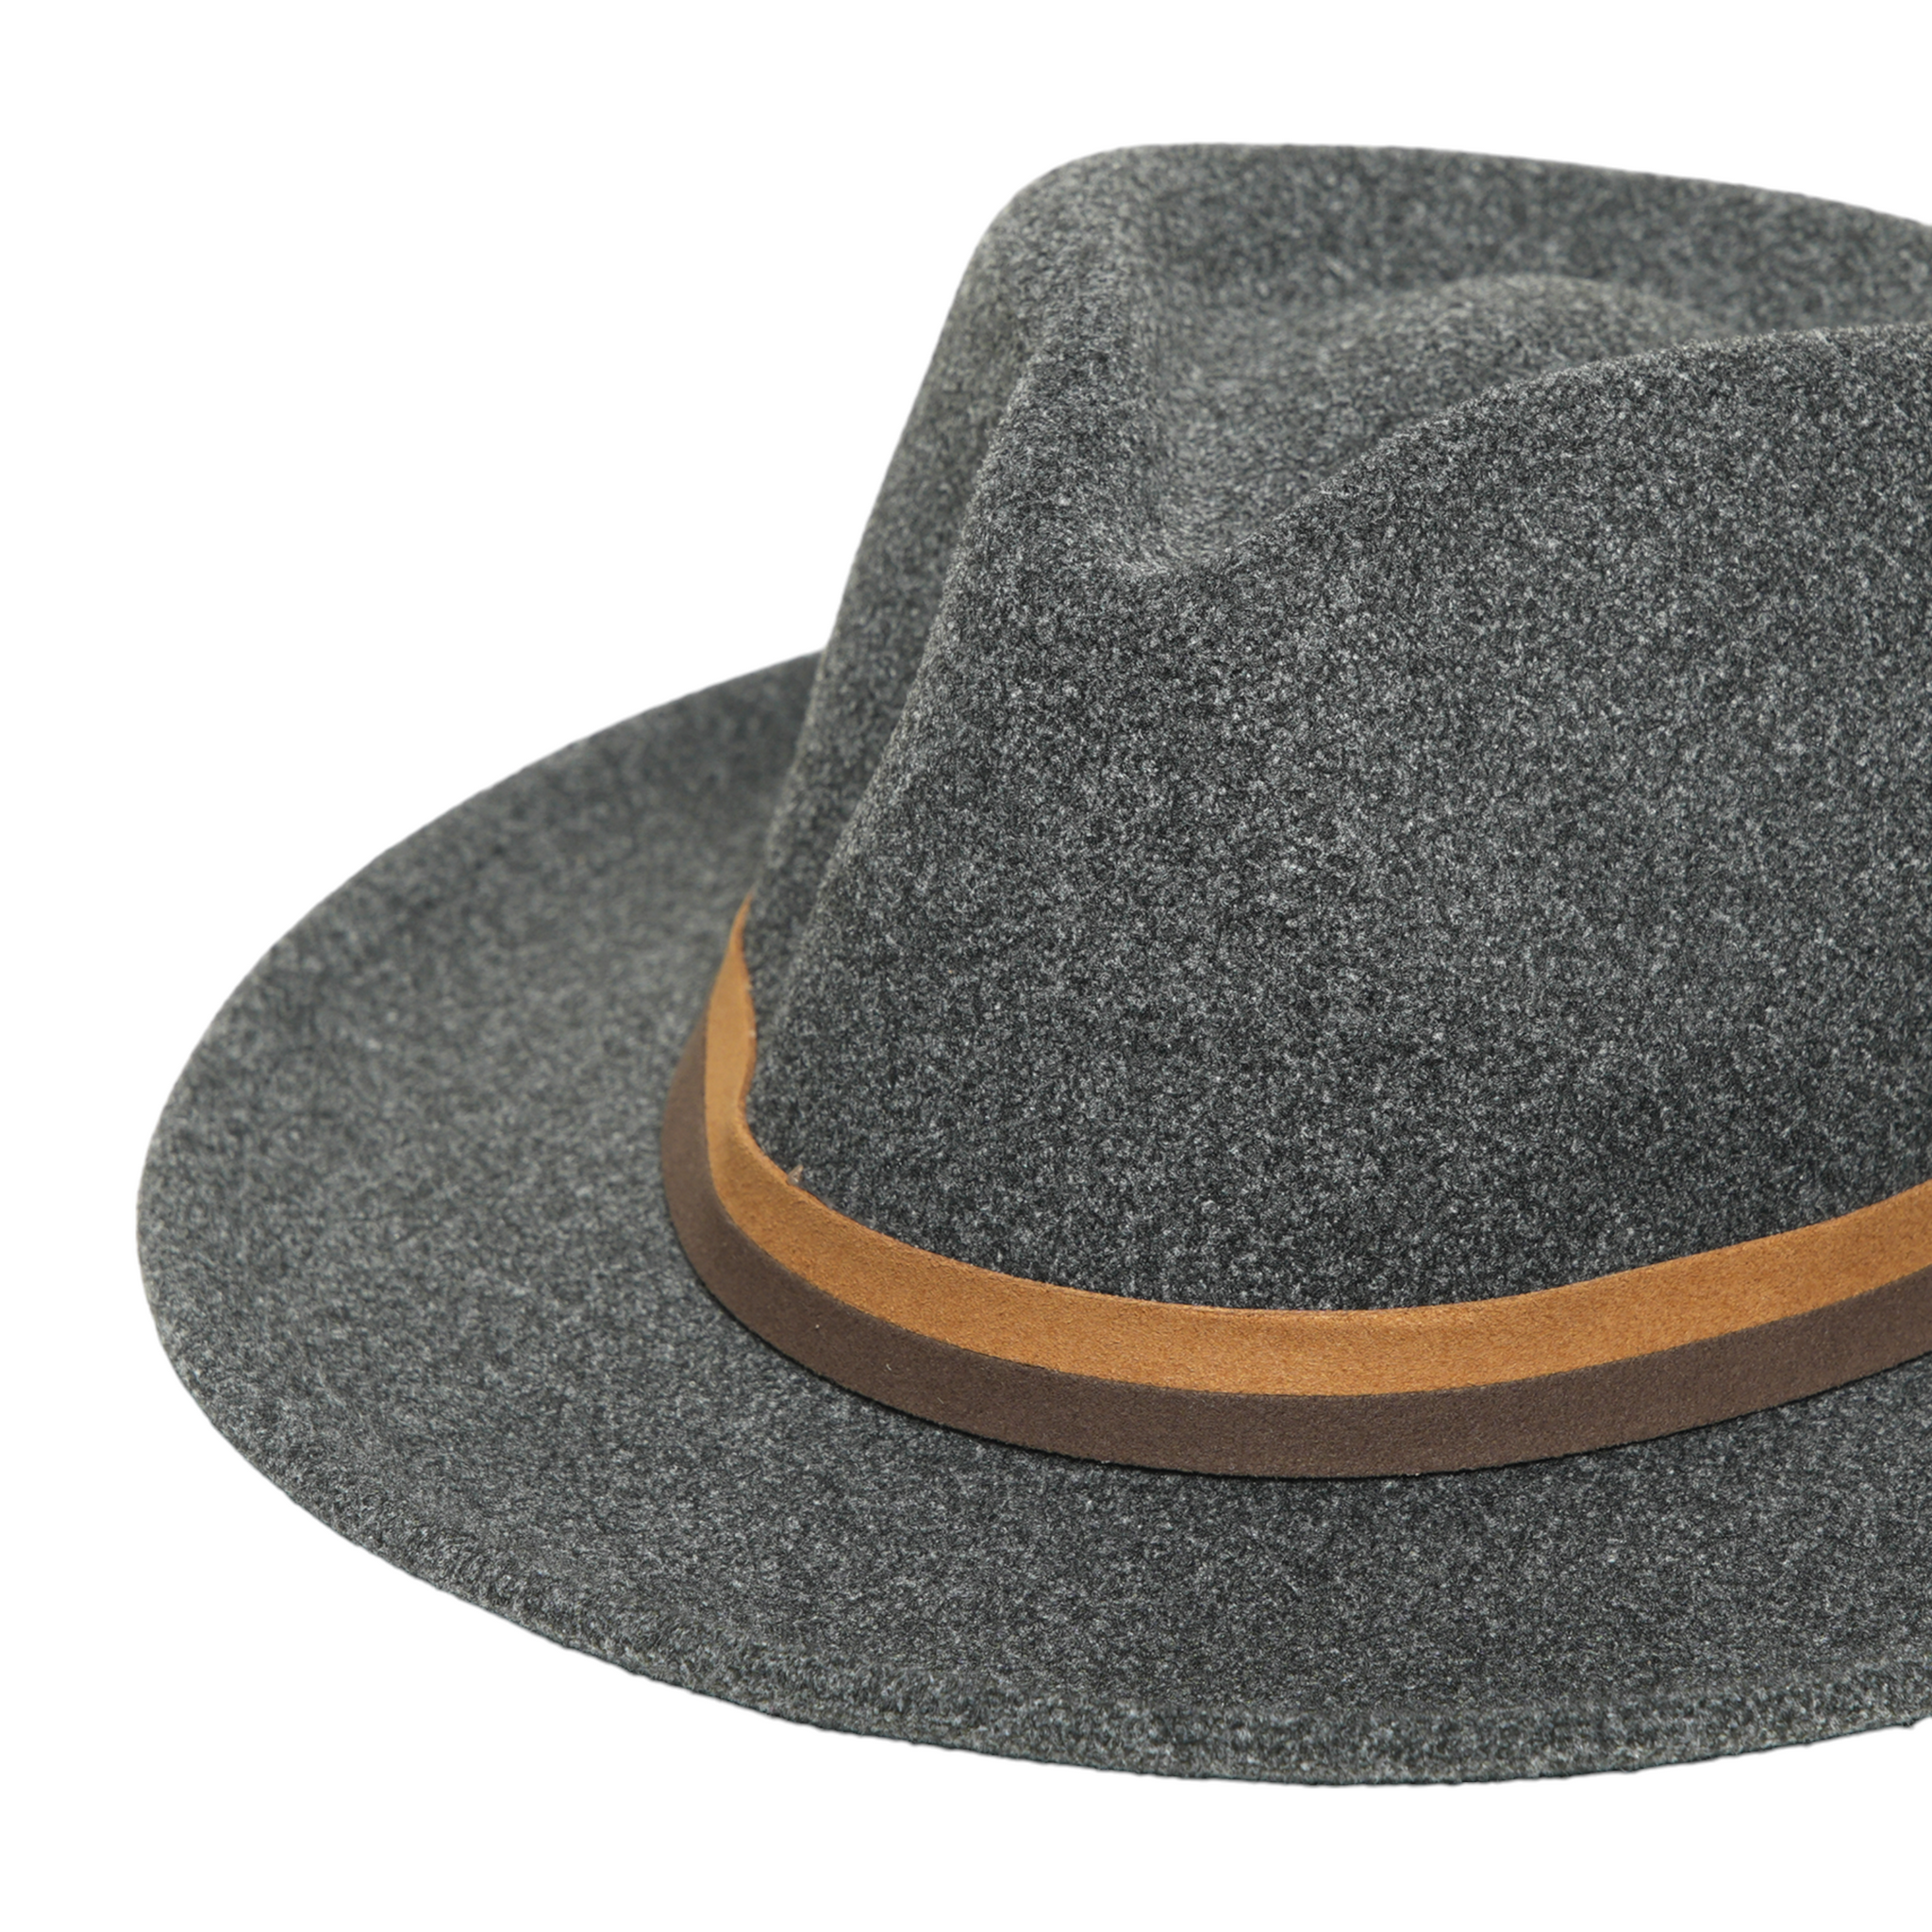 Chokore Fedora Hat with Dual Tone Band (Dark Gray)